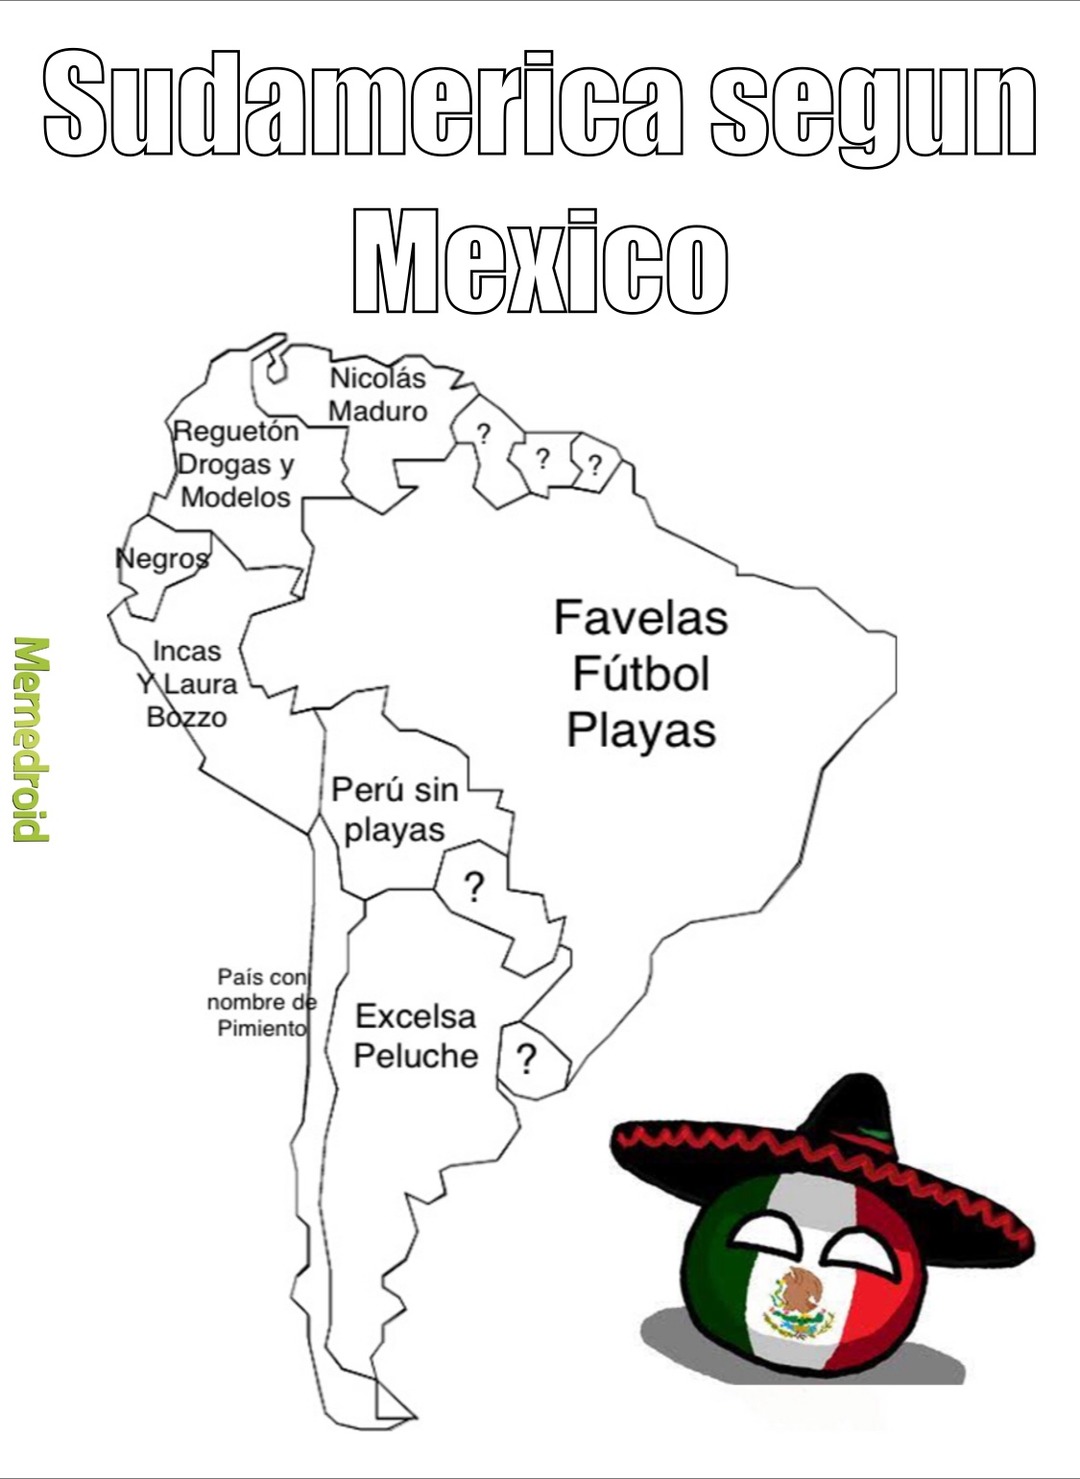 Sudamerica según Mexico - meme